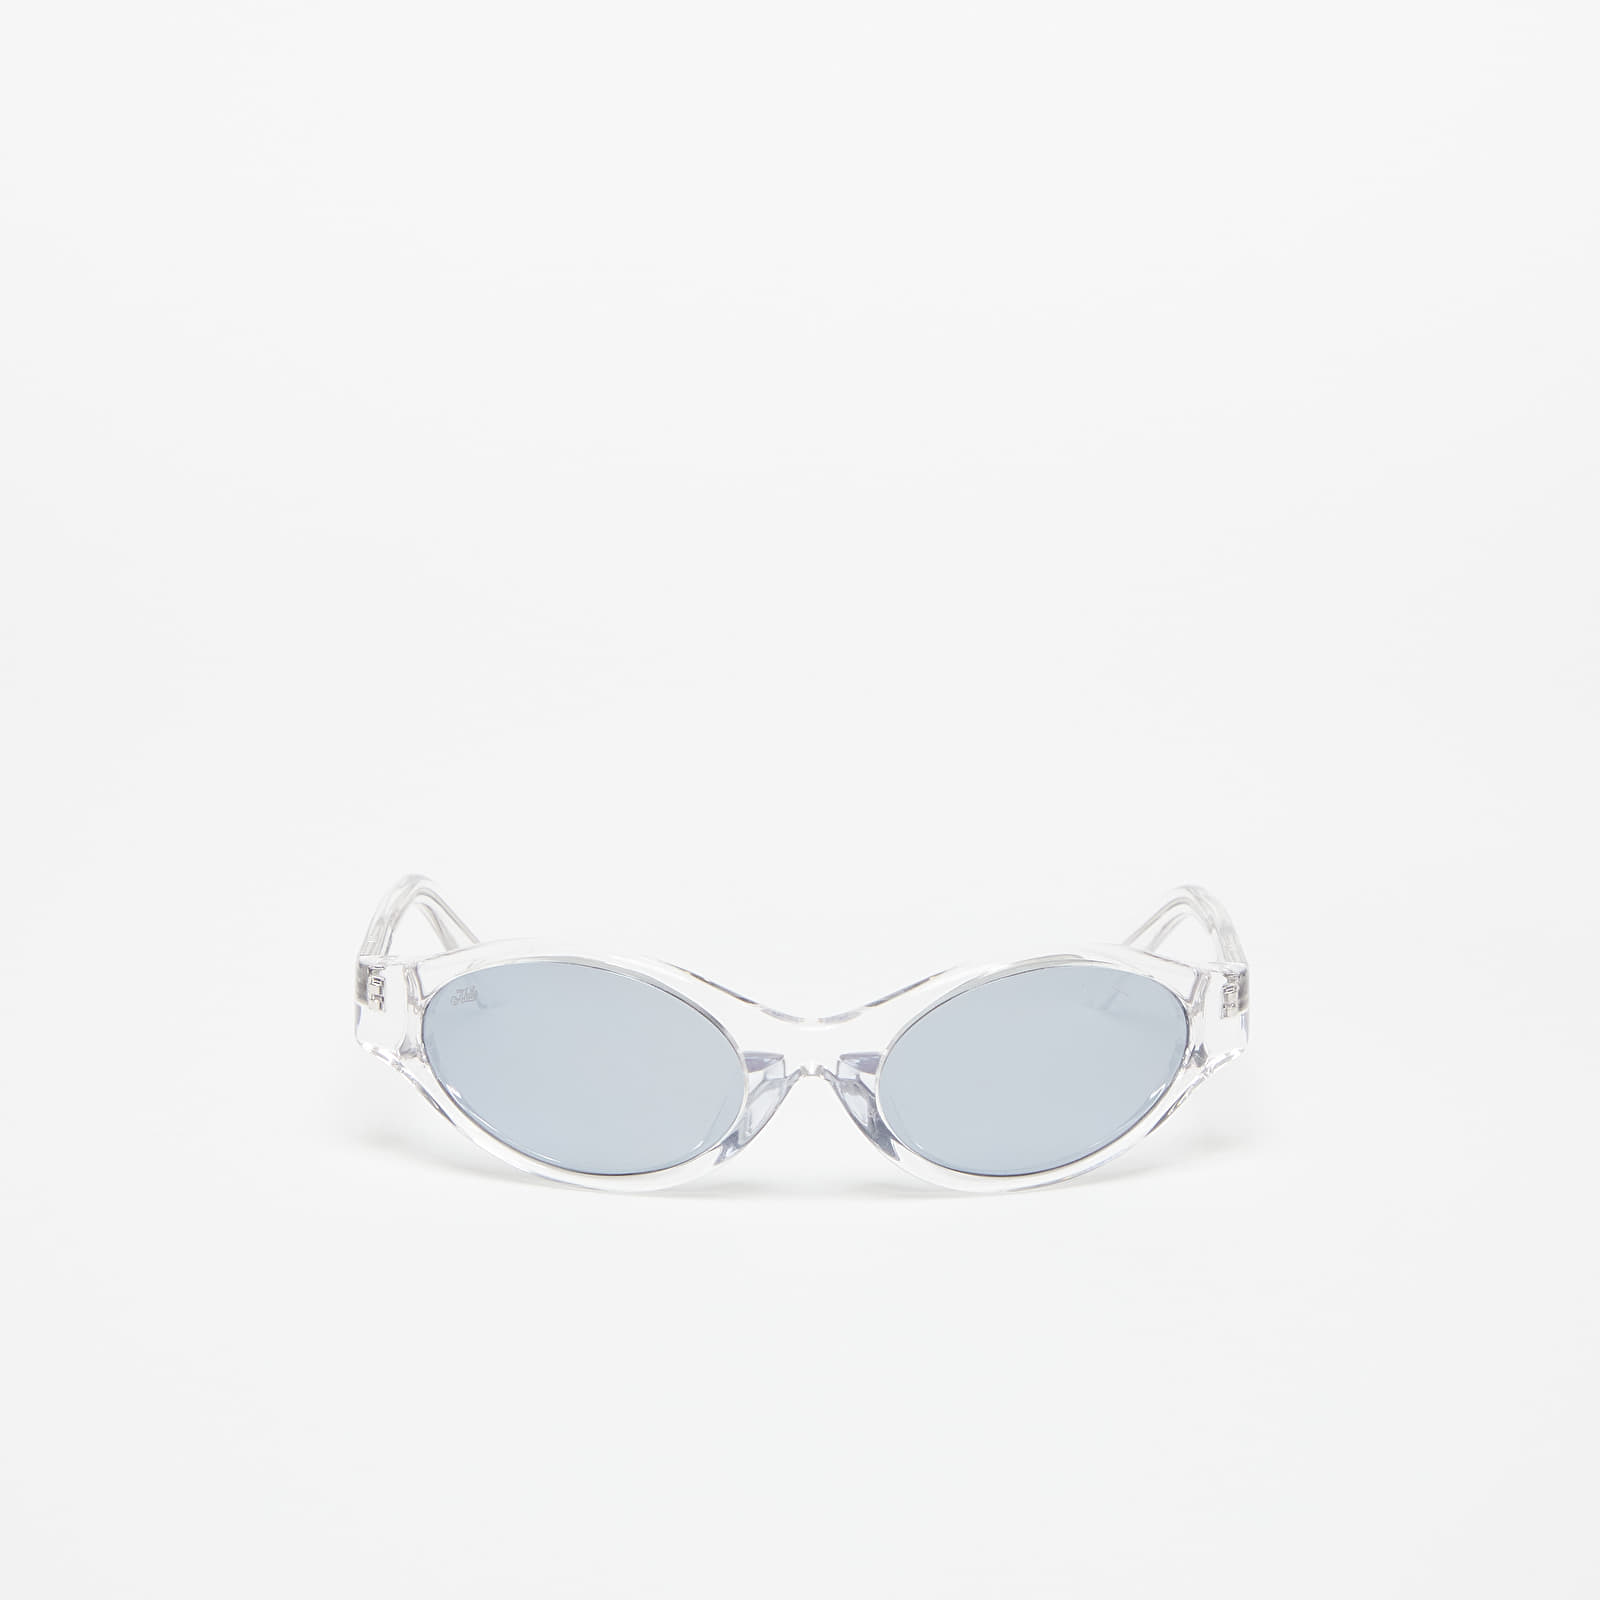 Sluneční brýle PLEASURES x Akila Reflex UNISEX Sunglasses Clear